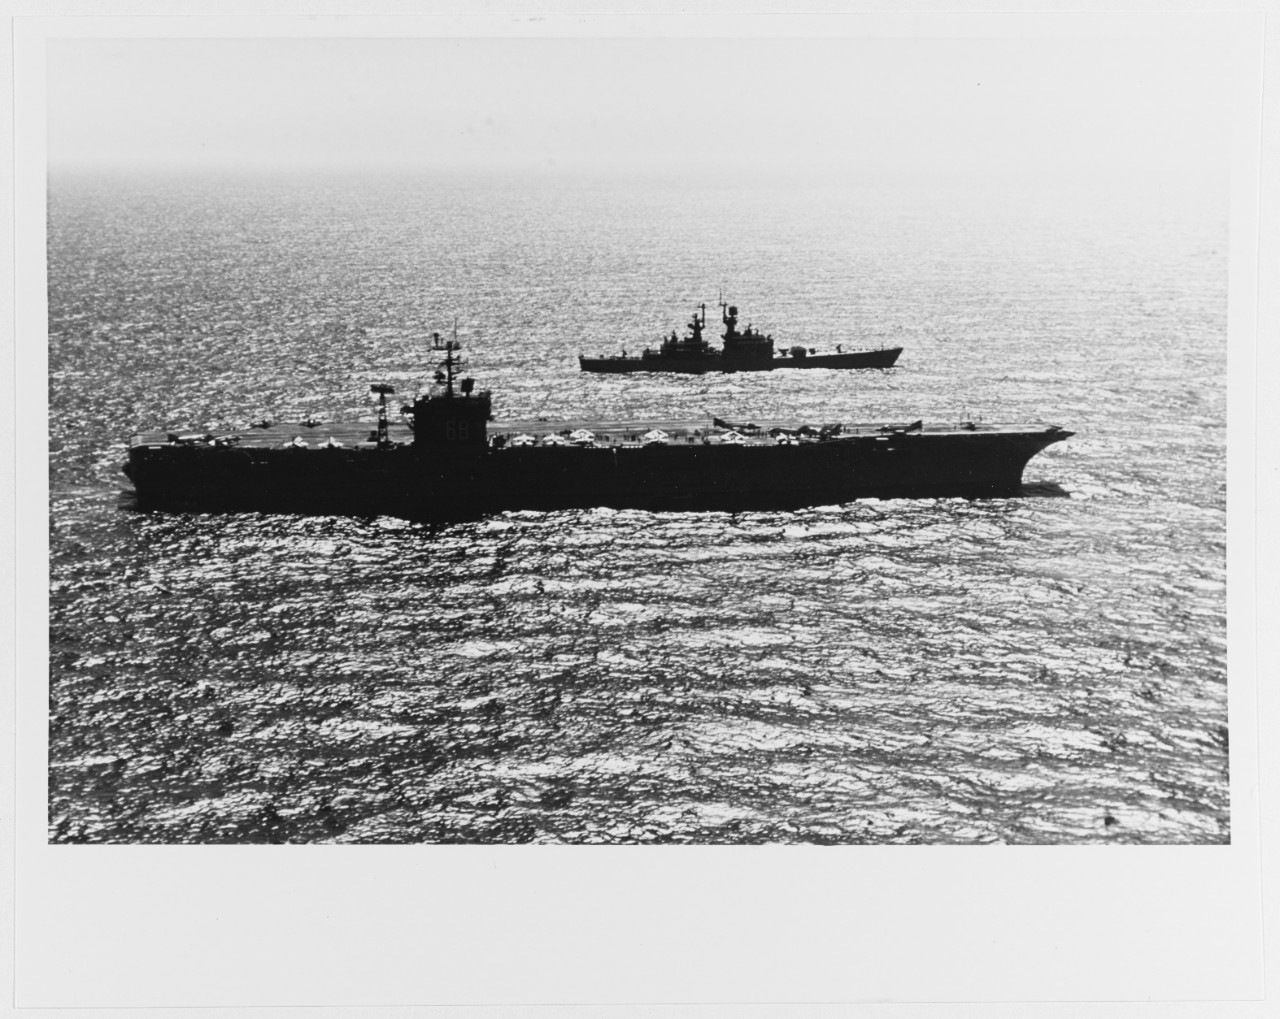 USS NIMITZ (CVN-68) and USS SOUTH CAROLINA (CGN-37) operating in the North Atlantic